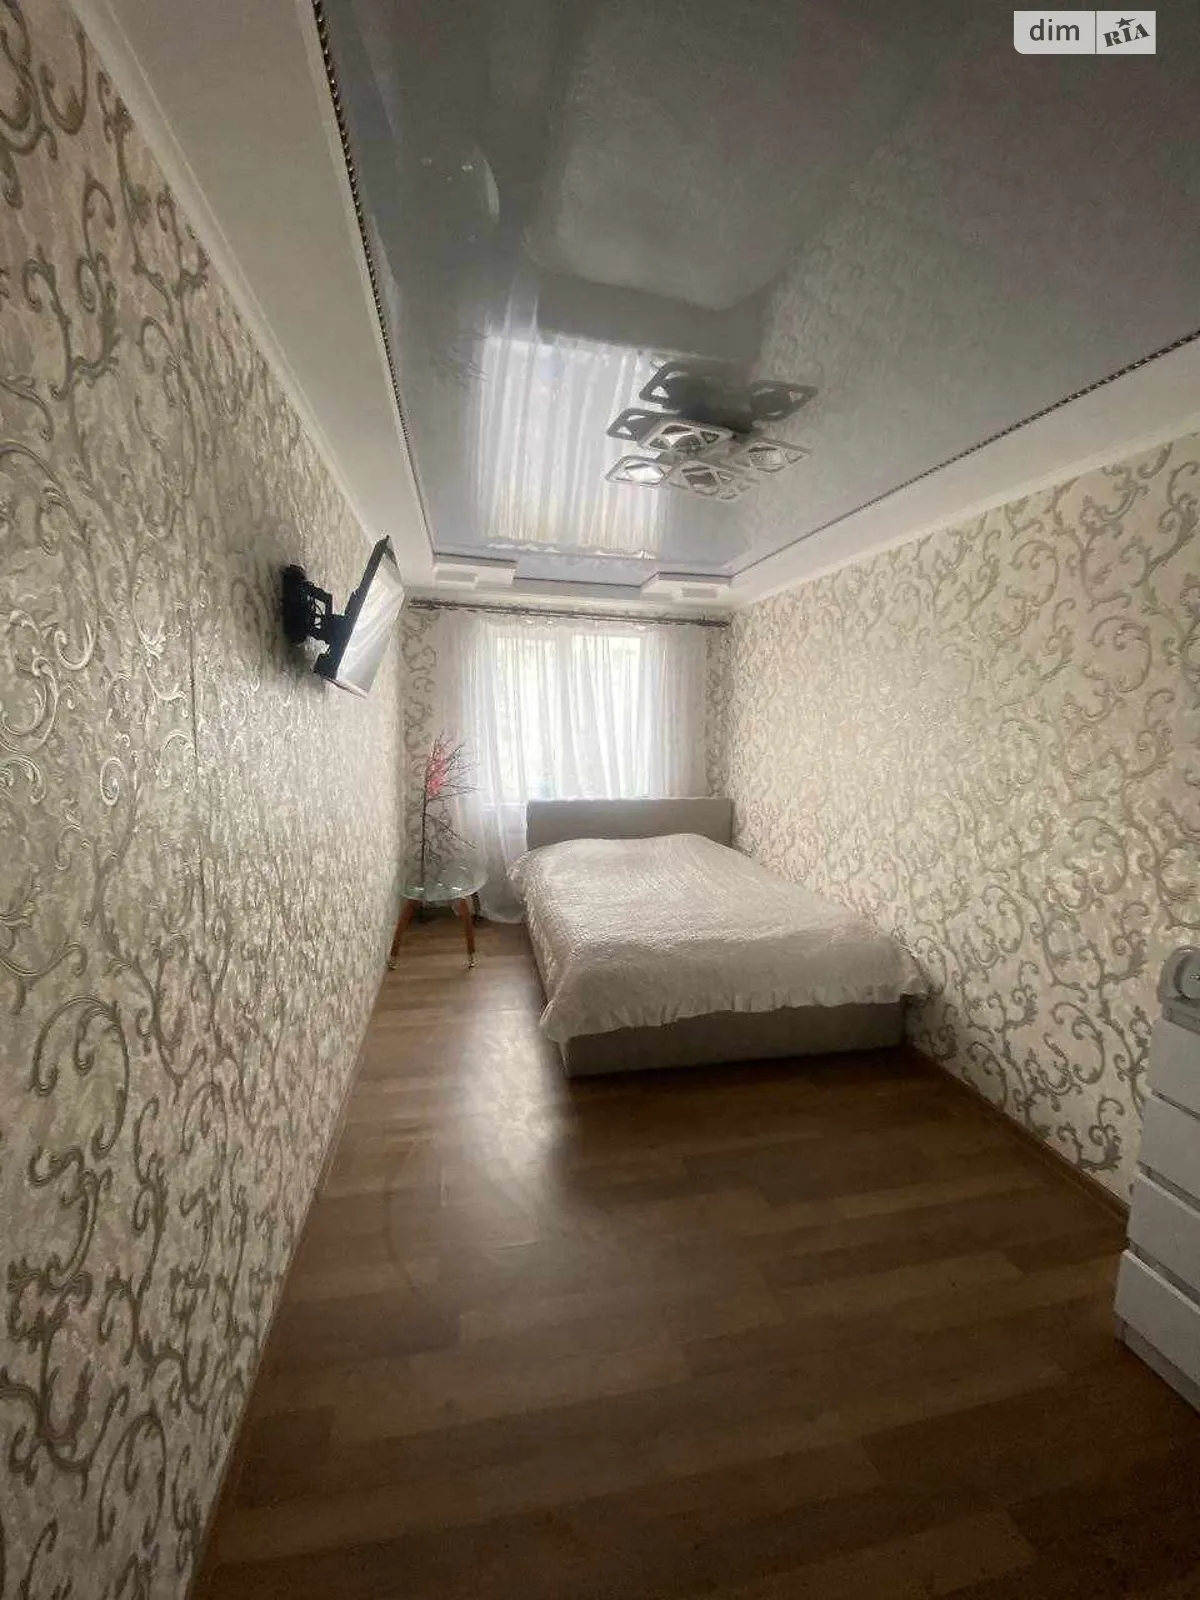 Продается 2-комнатная квартира 44.5 кв. м в Чернигове - фото 4